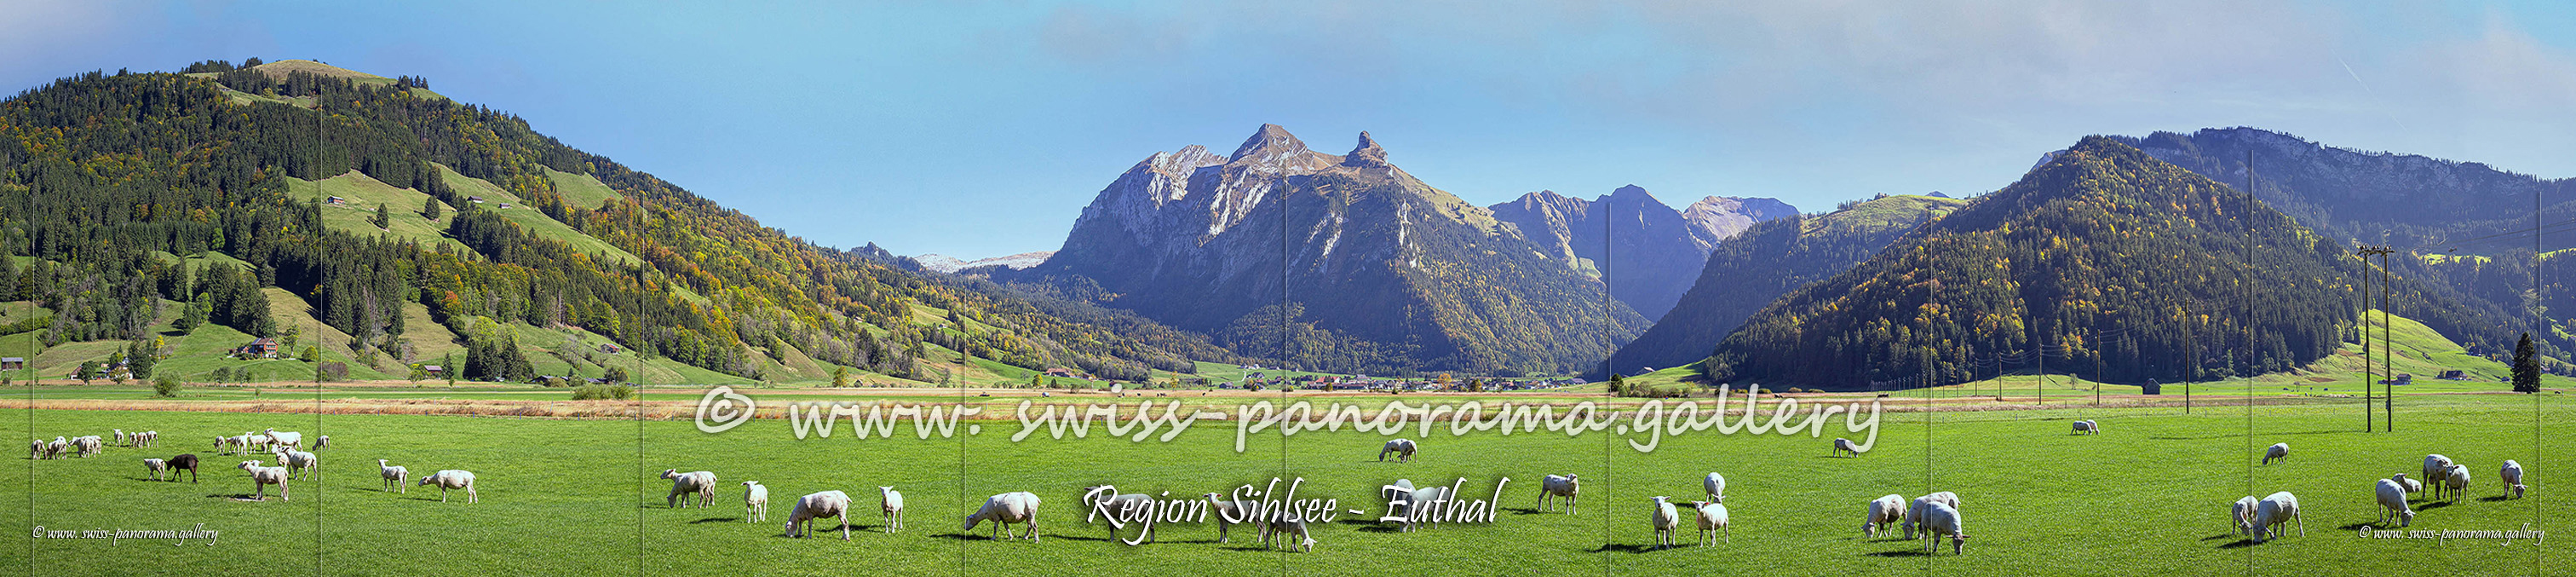 Swiss Panorama Euthal Alpenpanorama swiss-panorama.gallery